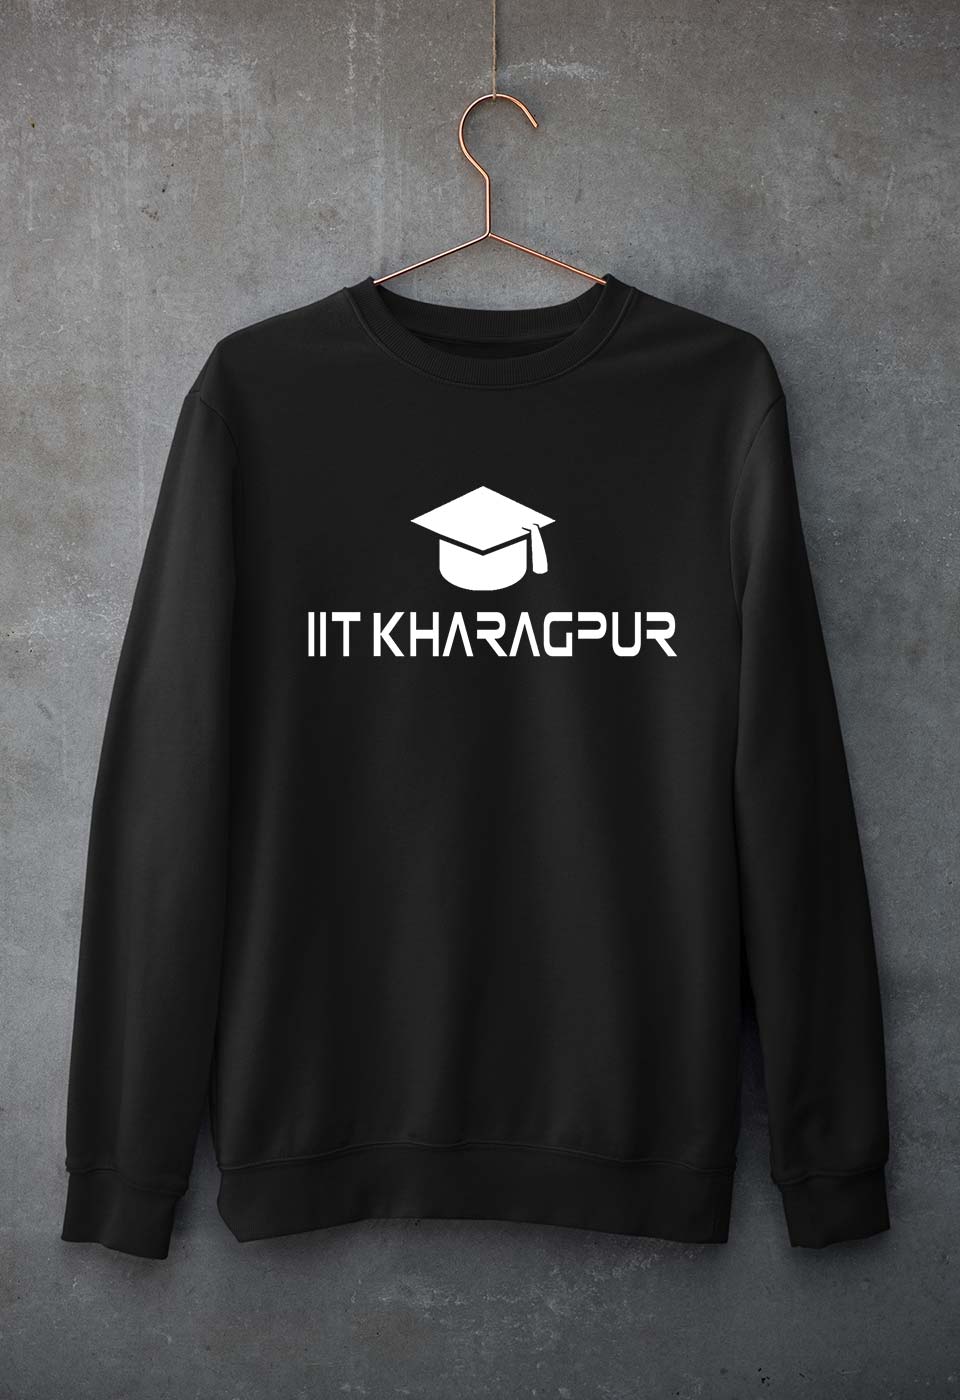 IIT Kharagpur Unisex Sweatshirt for Men/Women-S(40 Inches)-Black-Ektarfa.online